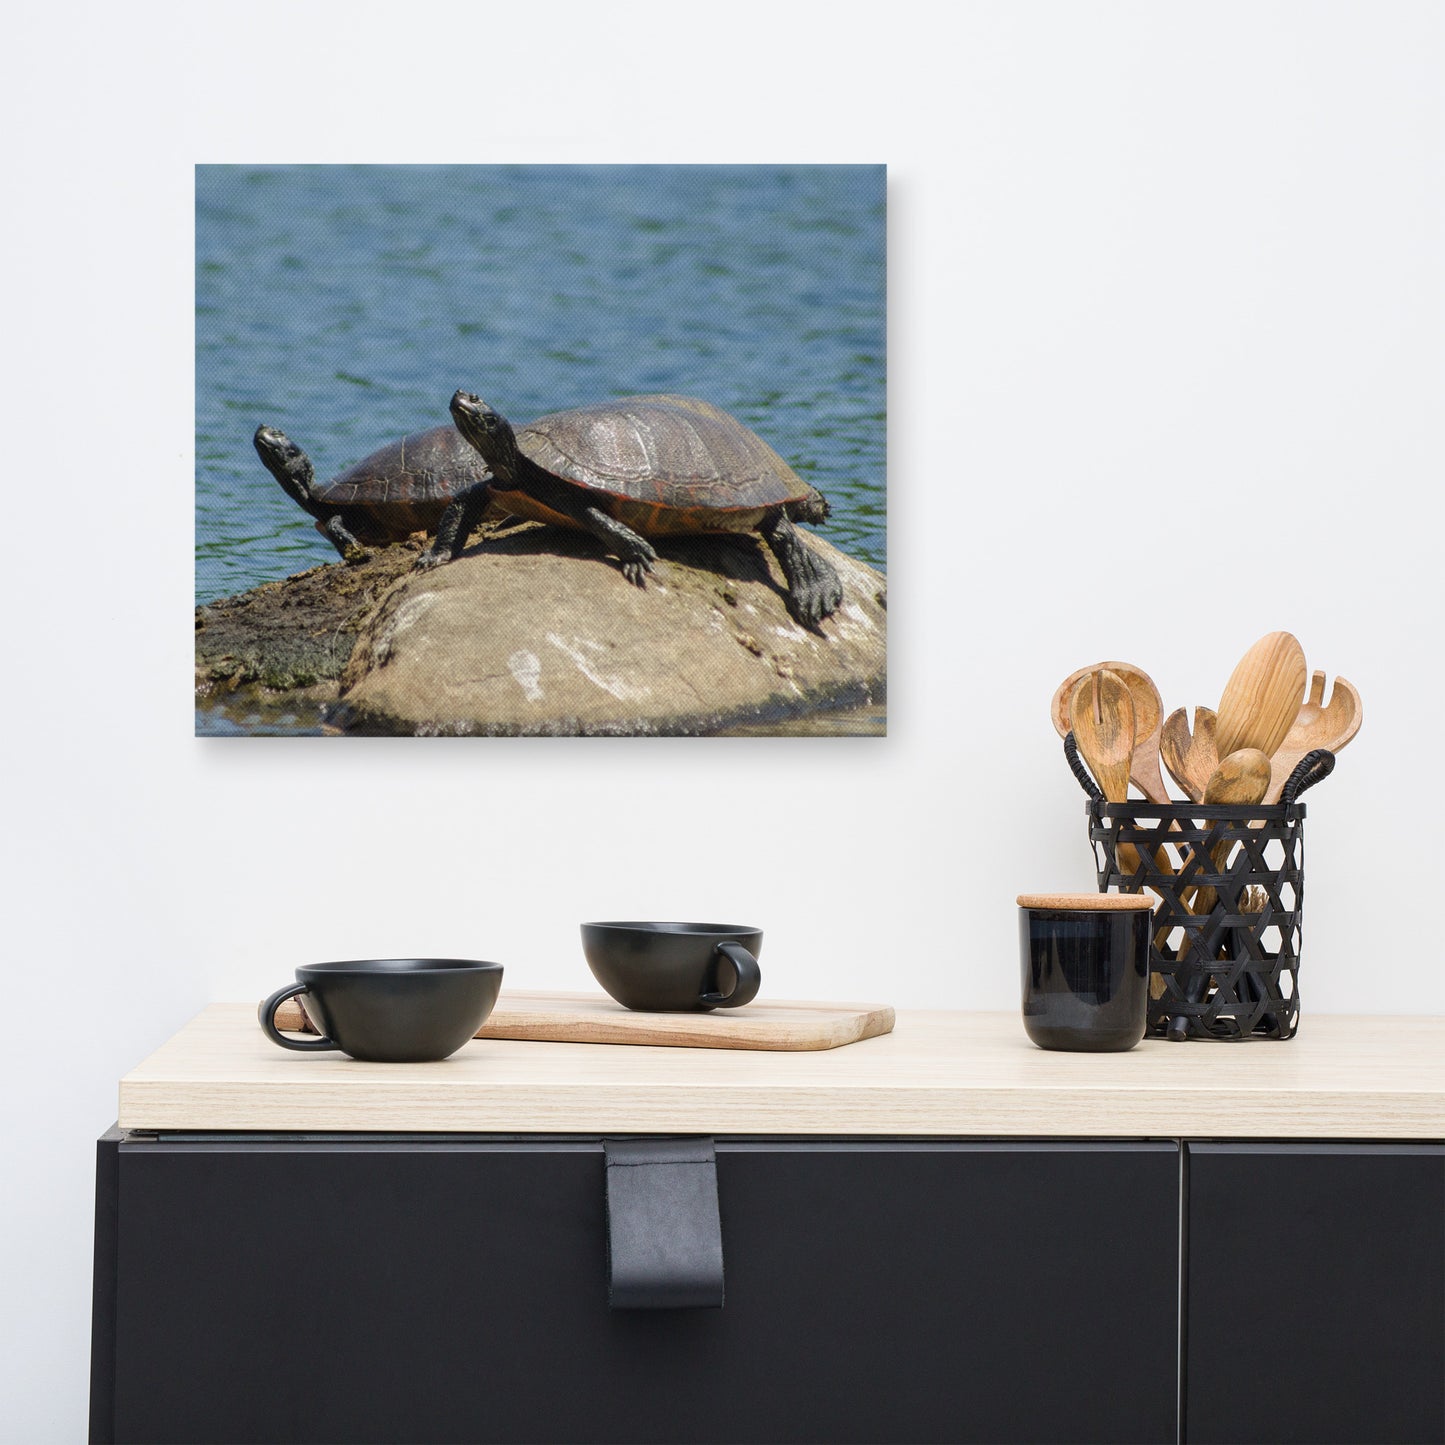 Sunshine Rock with Turtles Animal / Wildlife Photograph Canvas Wall Art Prints